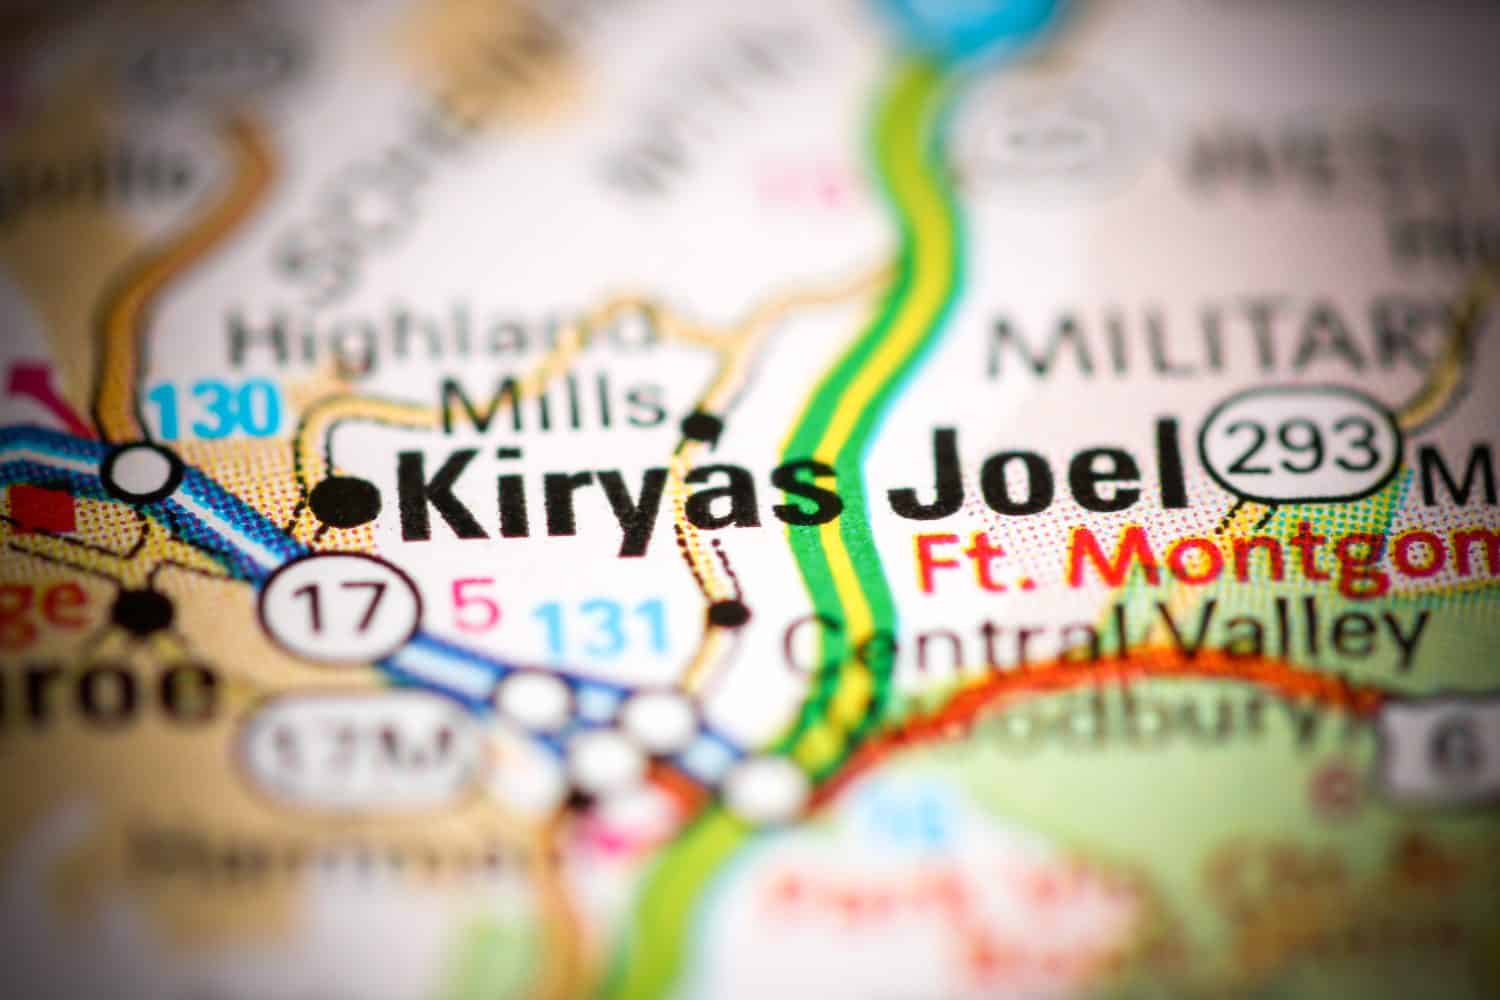 Kiryas Joel. New York. USA on a geography map